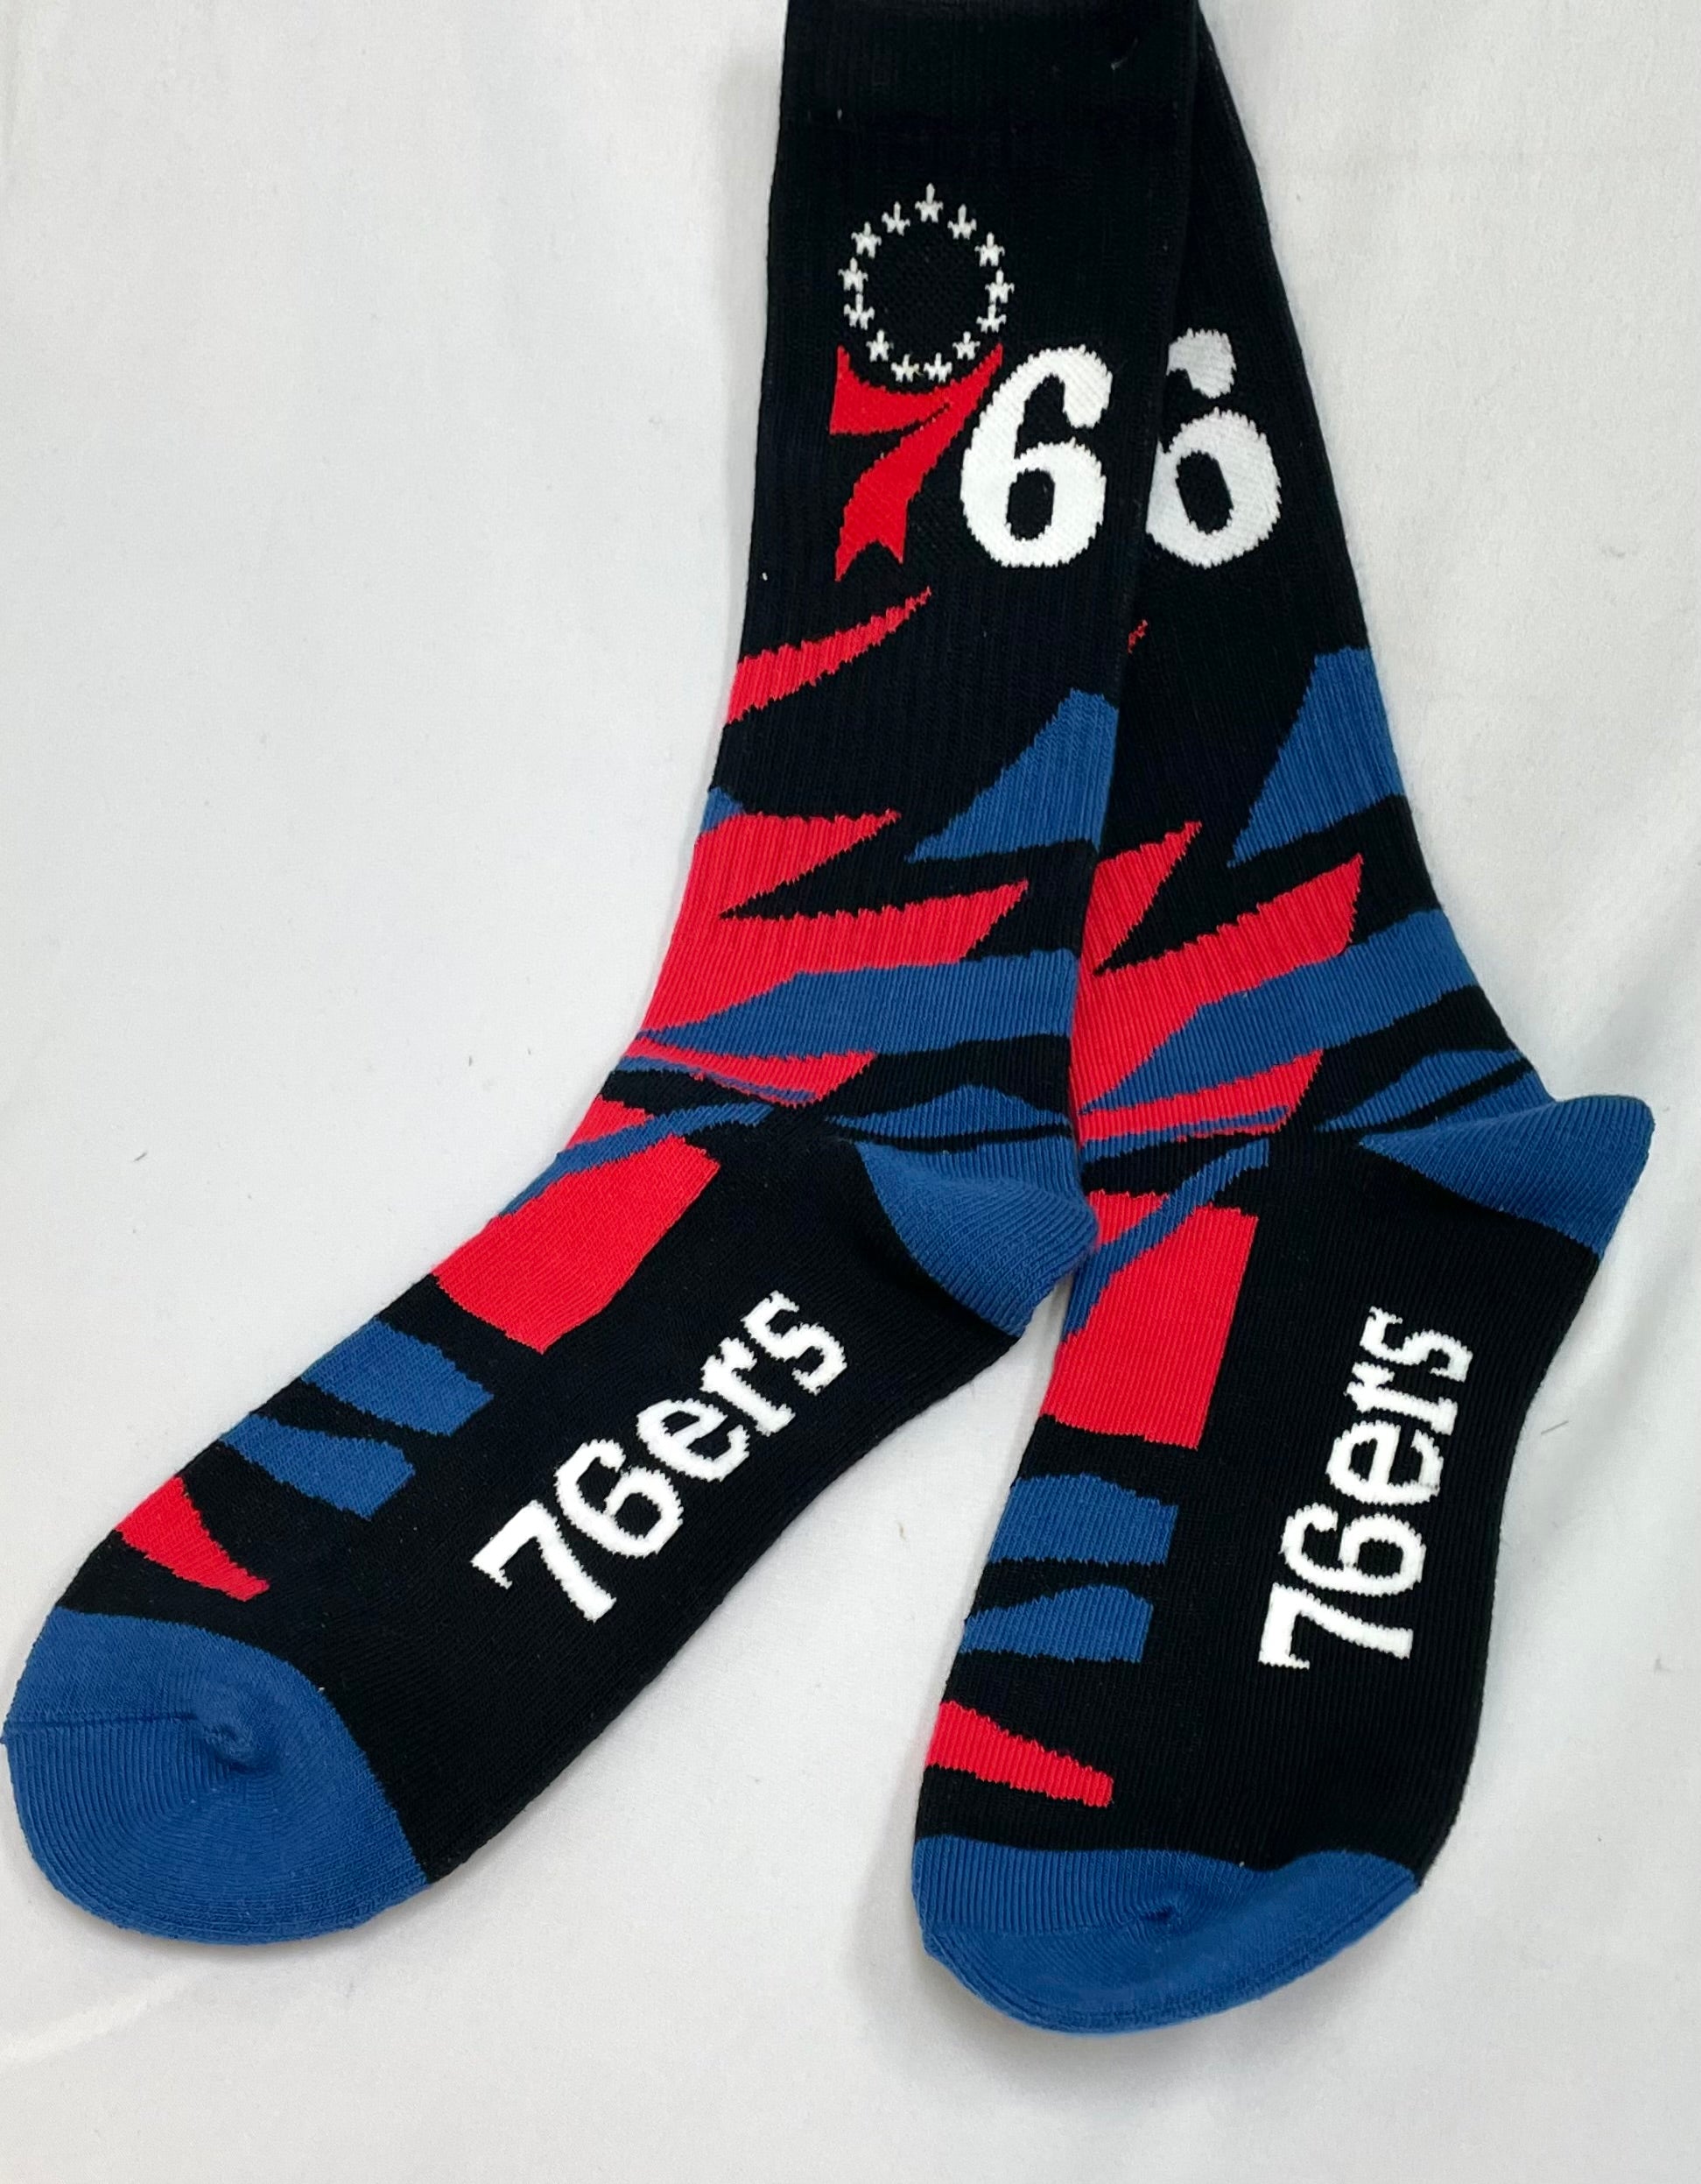 Philadelphia 76ers Shattered Camo Socks - Size Large